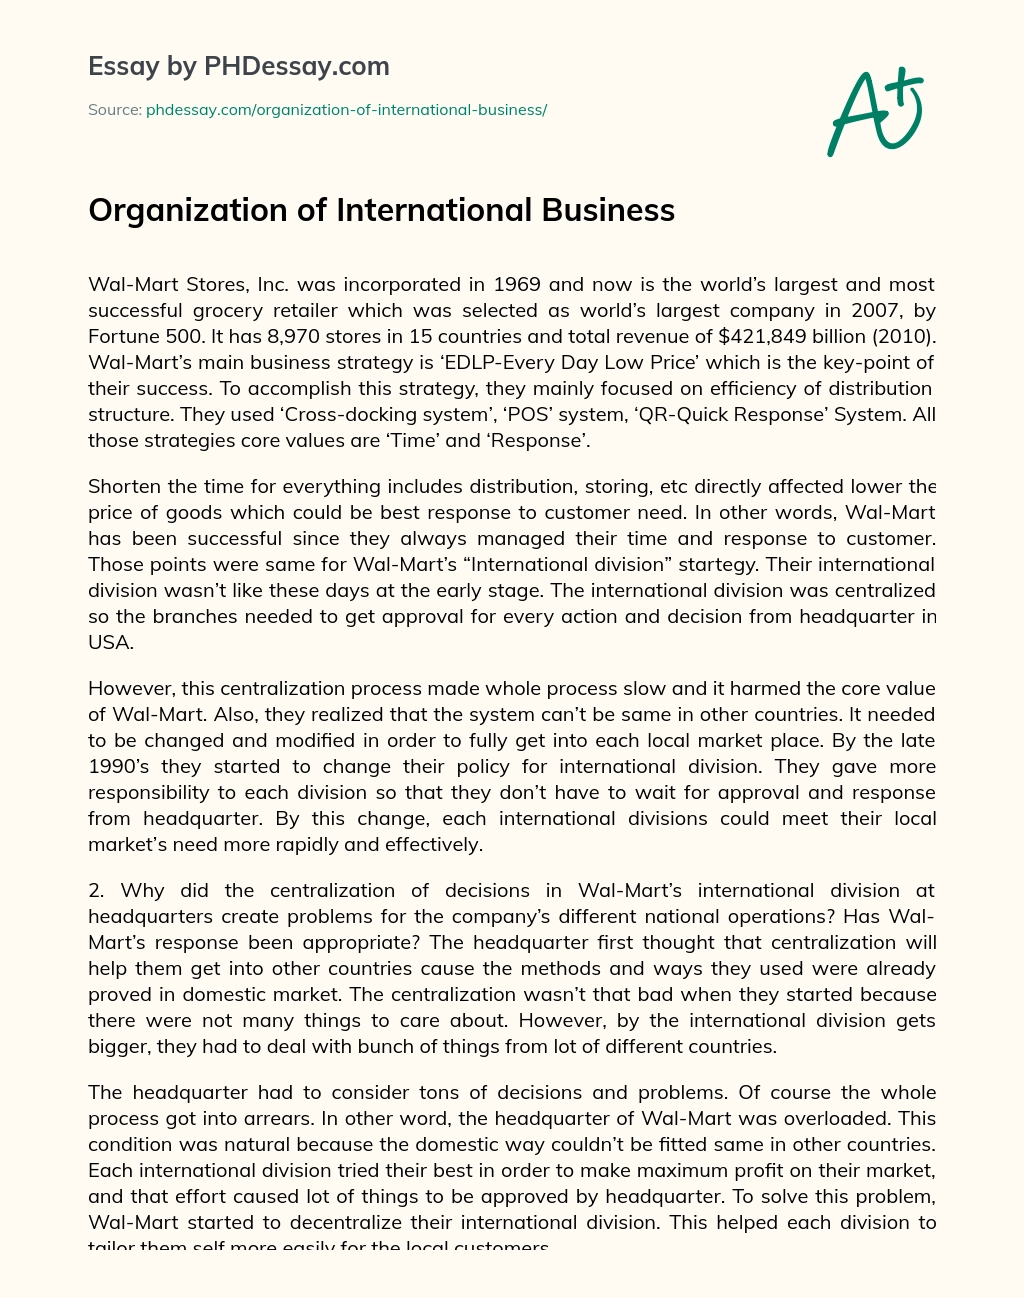 Organization of International Business essay